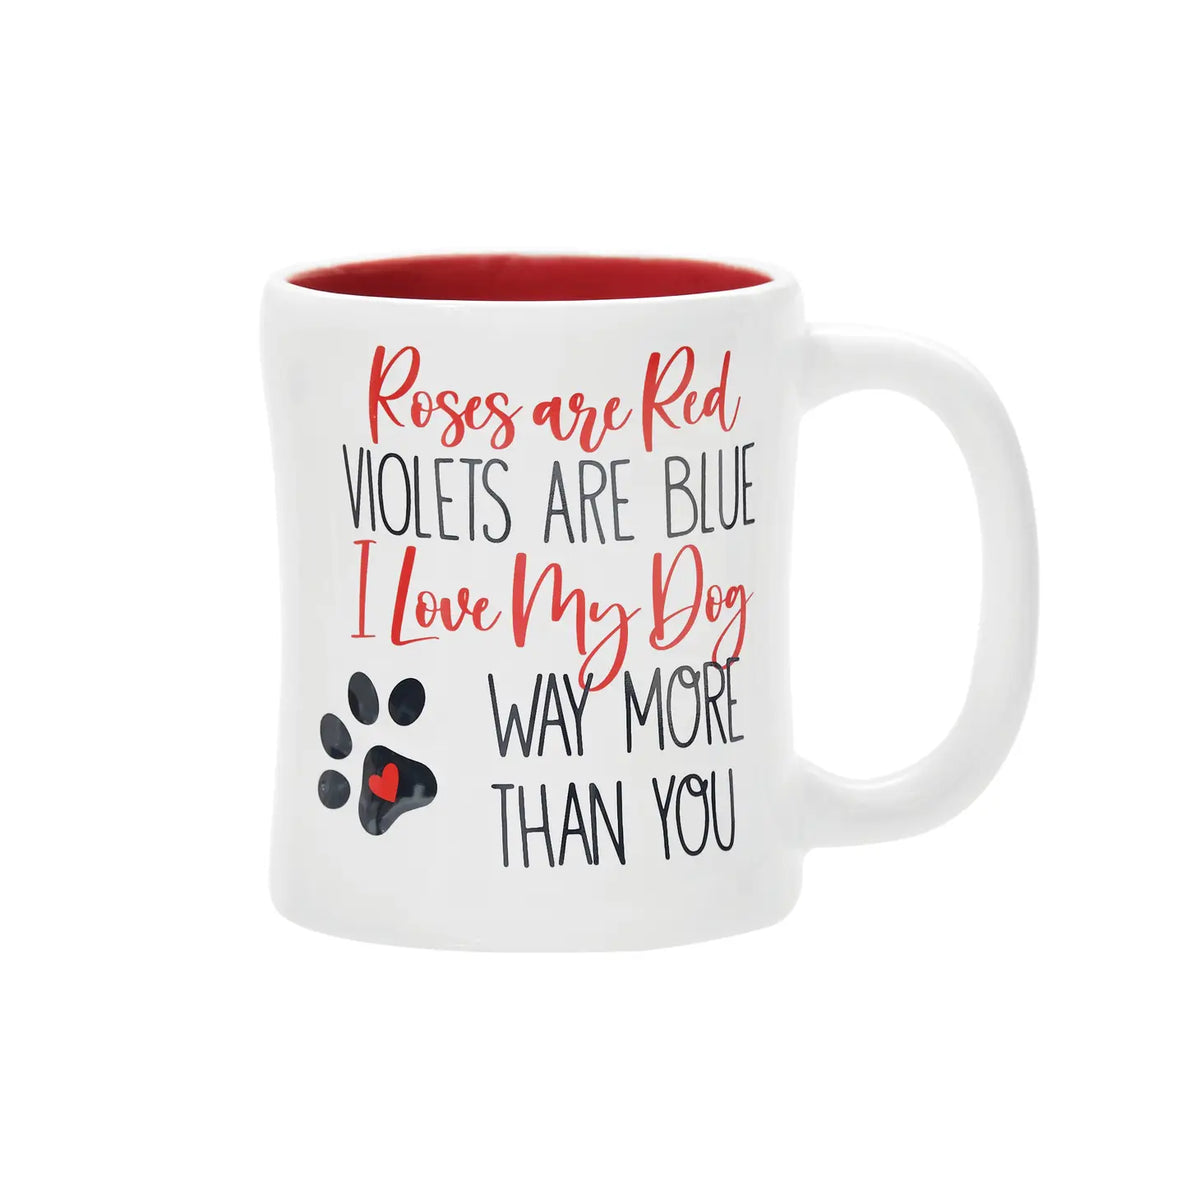 C&F Home - Valentine's Day "Love My Dog More" Coffee Mug